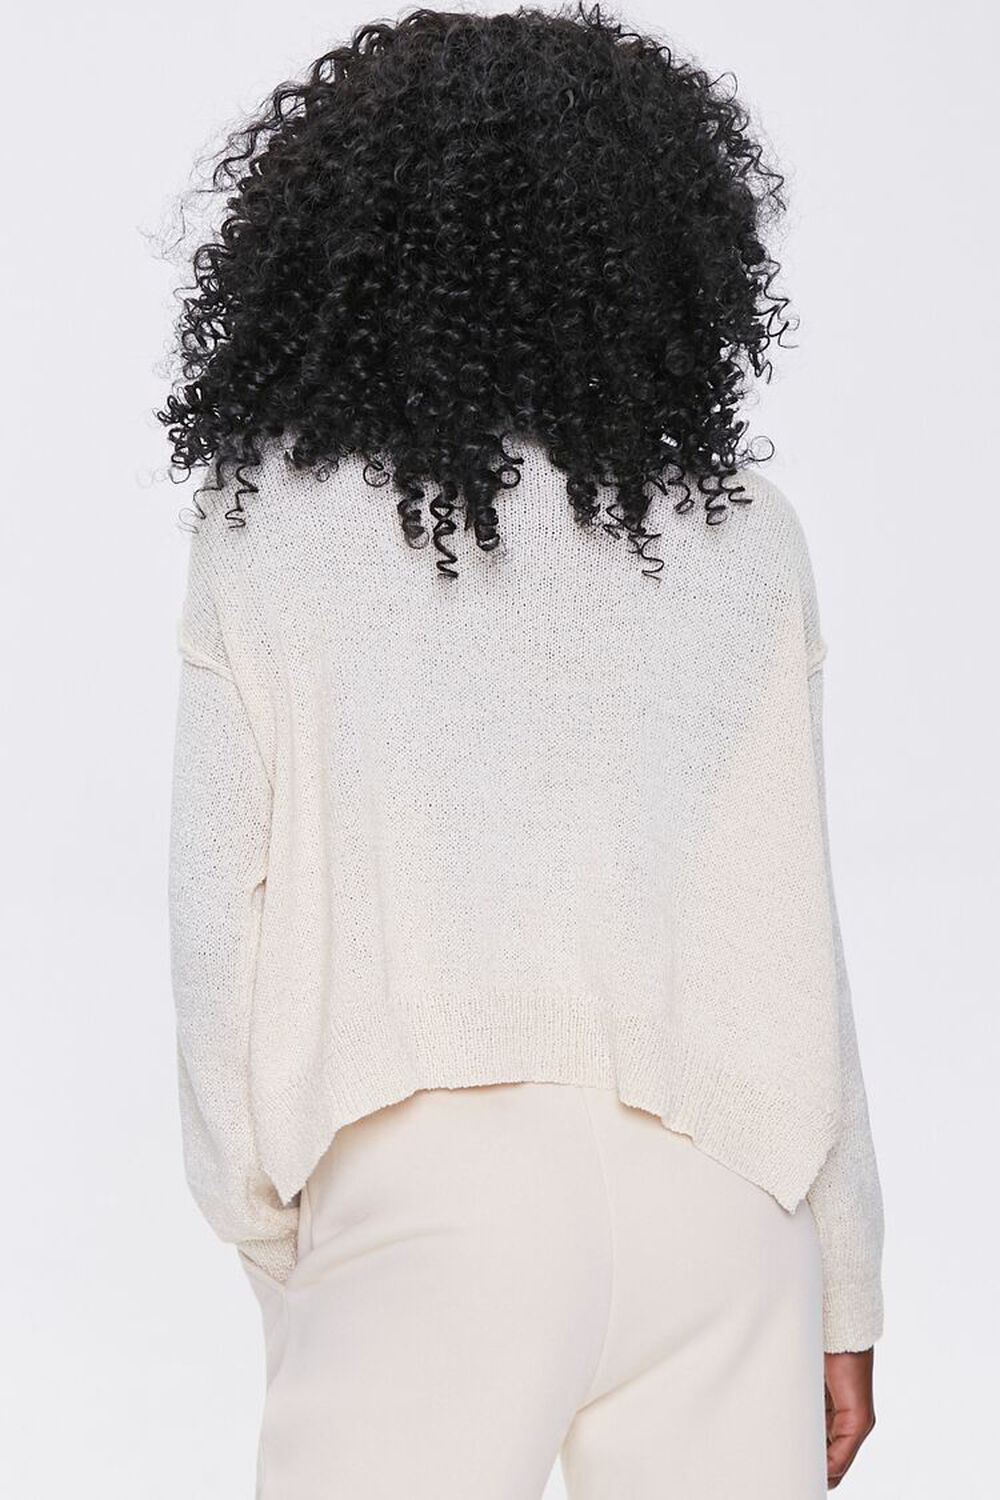 BEIGE Ribbed Drop-Sleeve Sweater, image 3